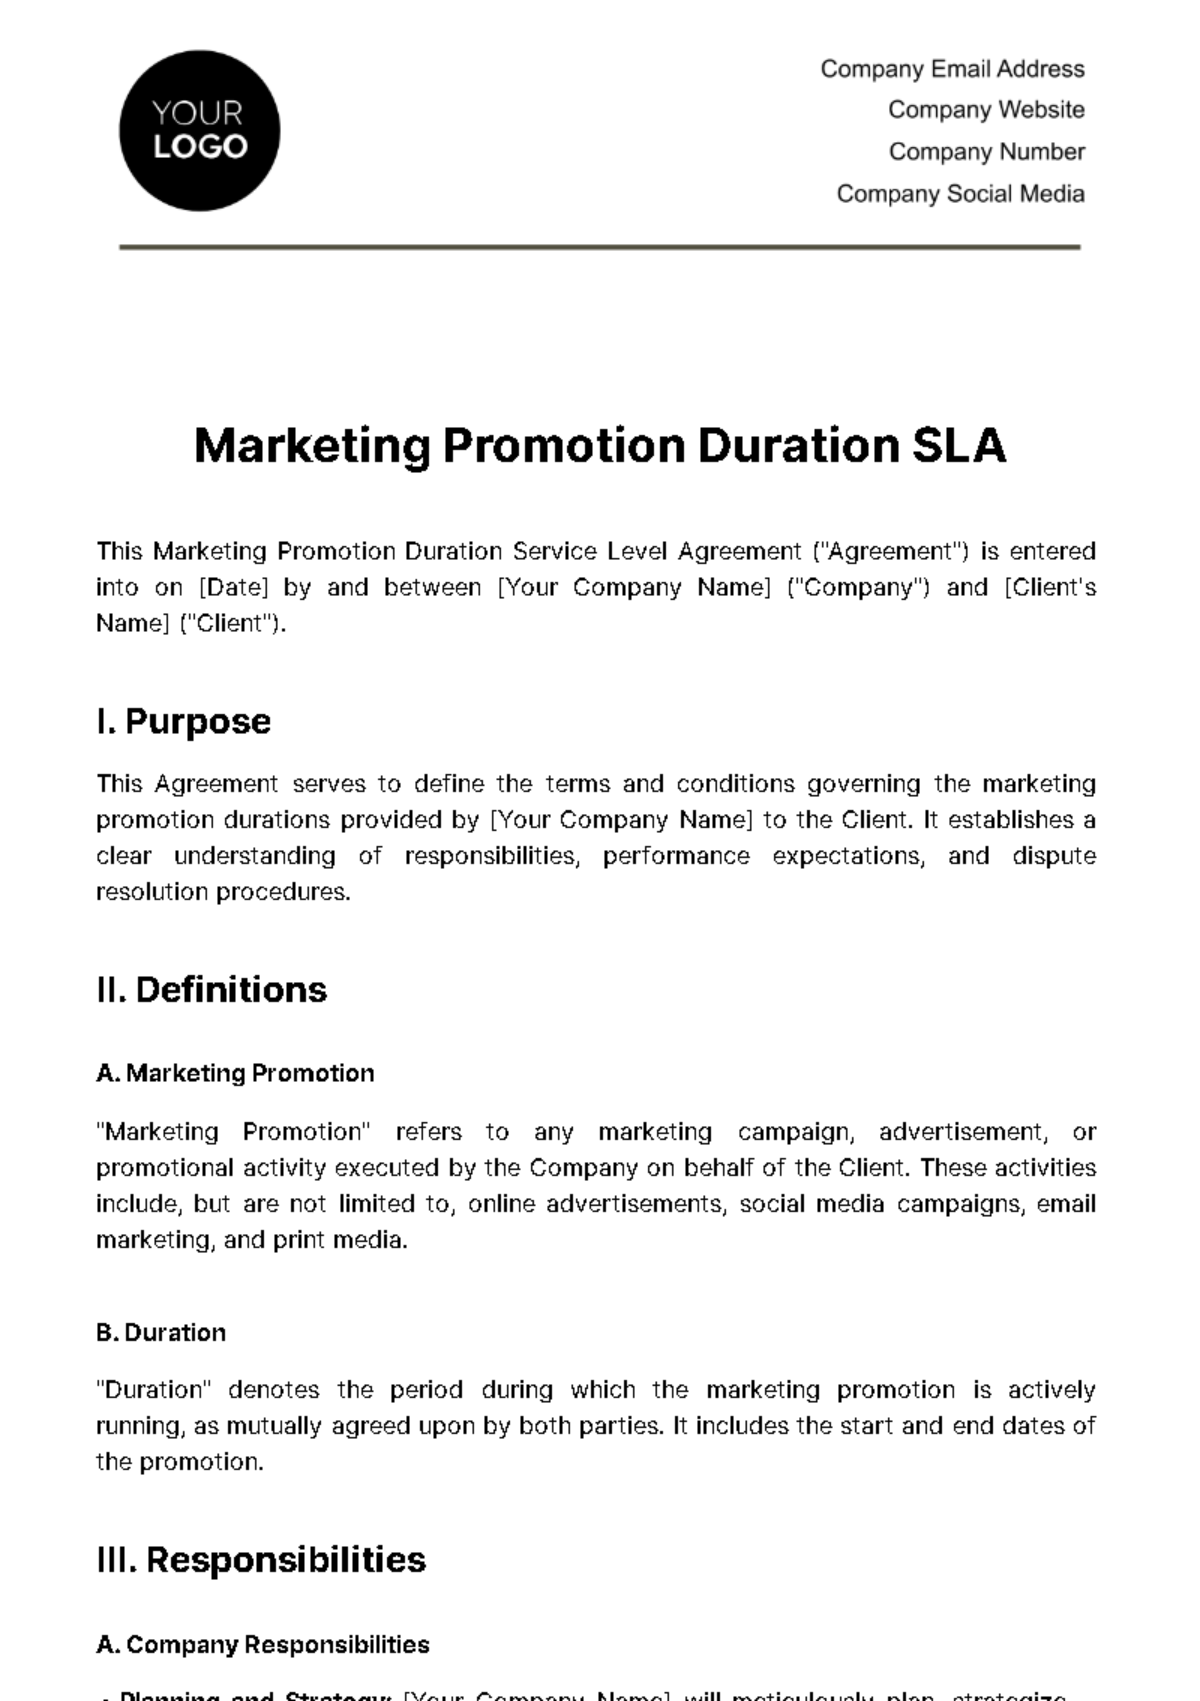 Free Marketing Promotion Duration SLA Template